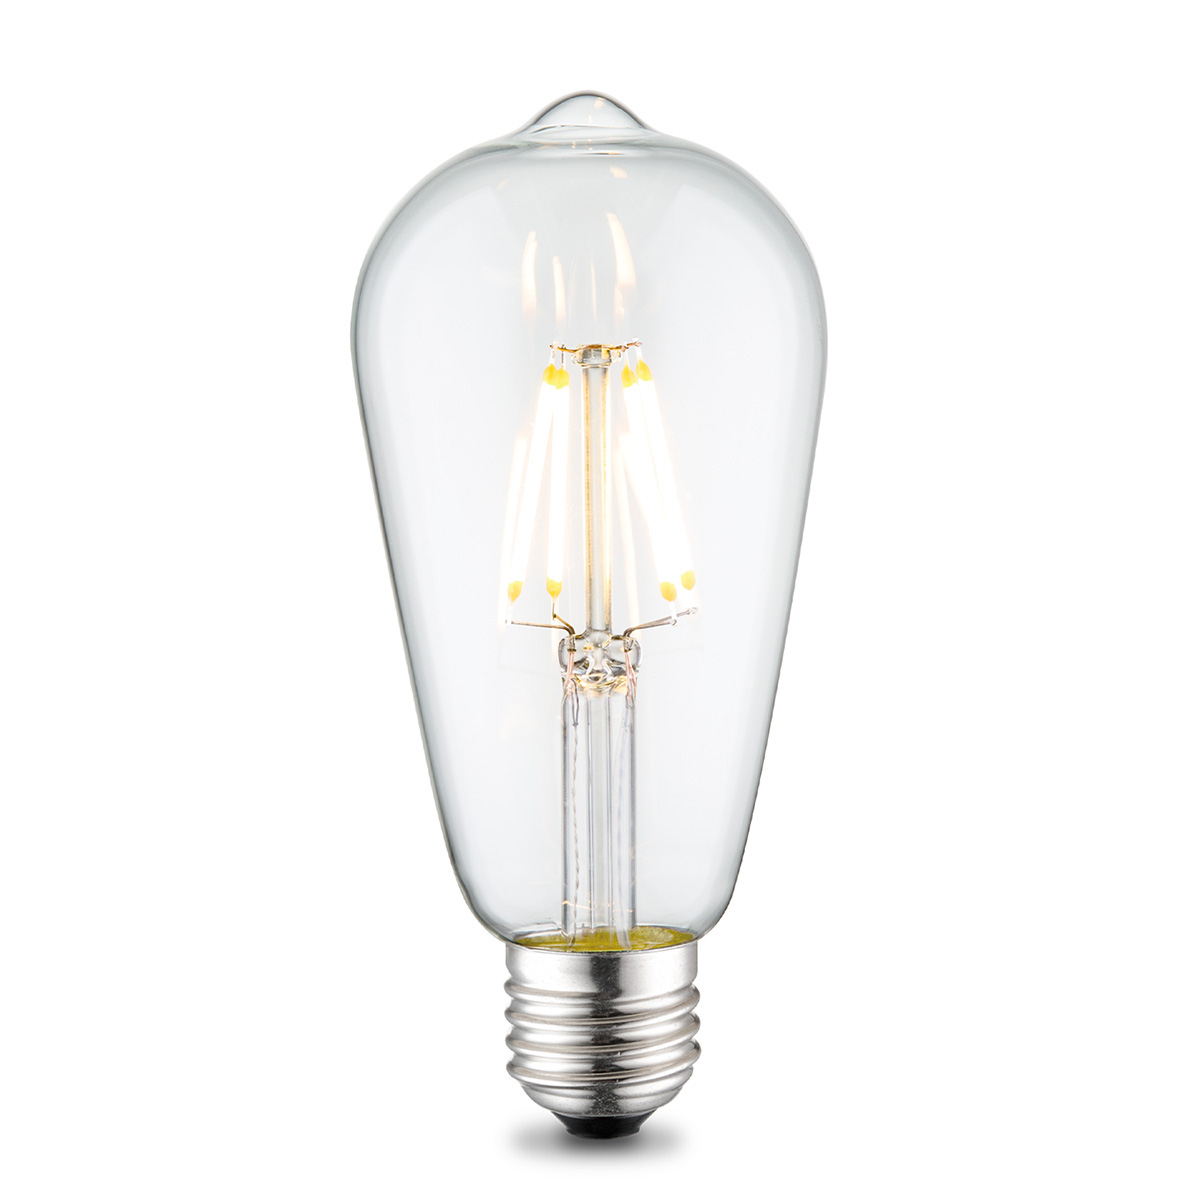 Tangla lighting - TLB-8001-04CL - LED Light Bulb Deco filament - ST64 4W clear - dimmable - E27